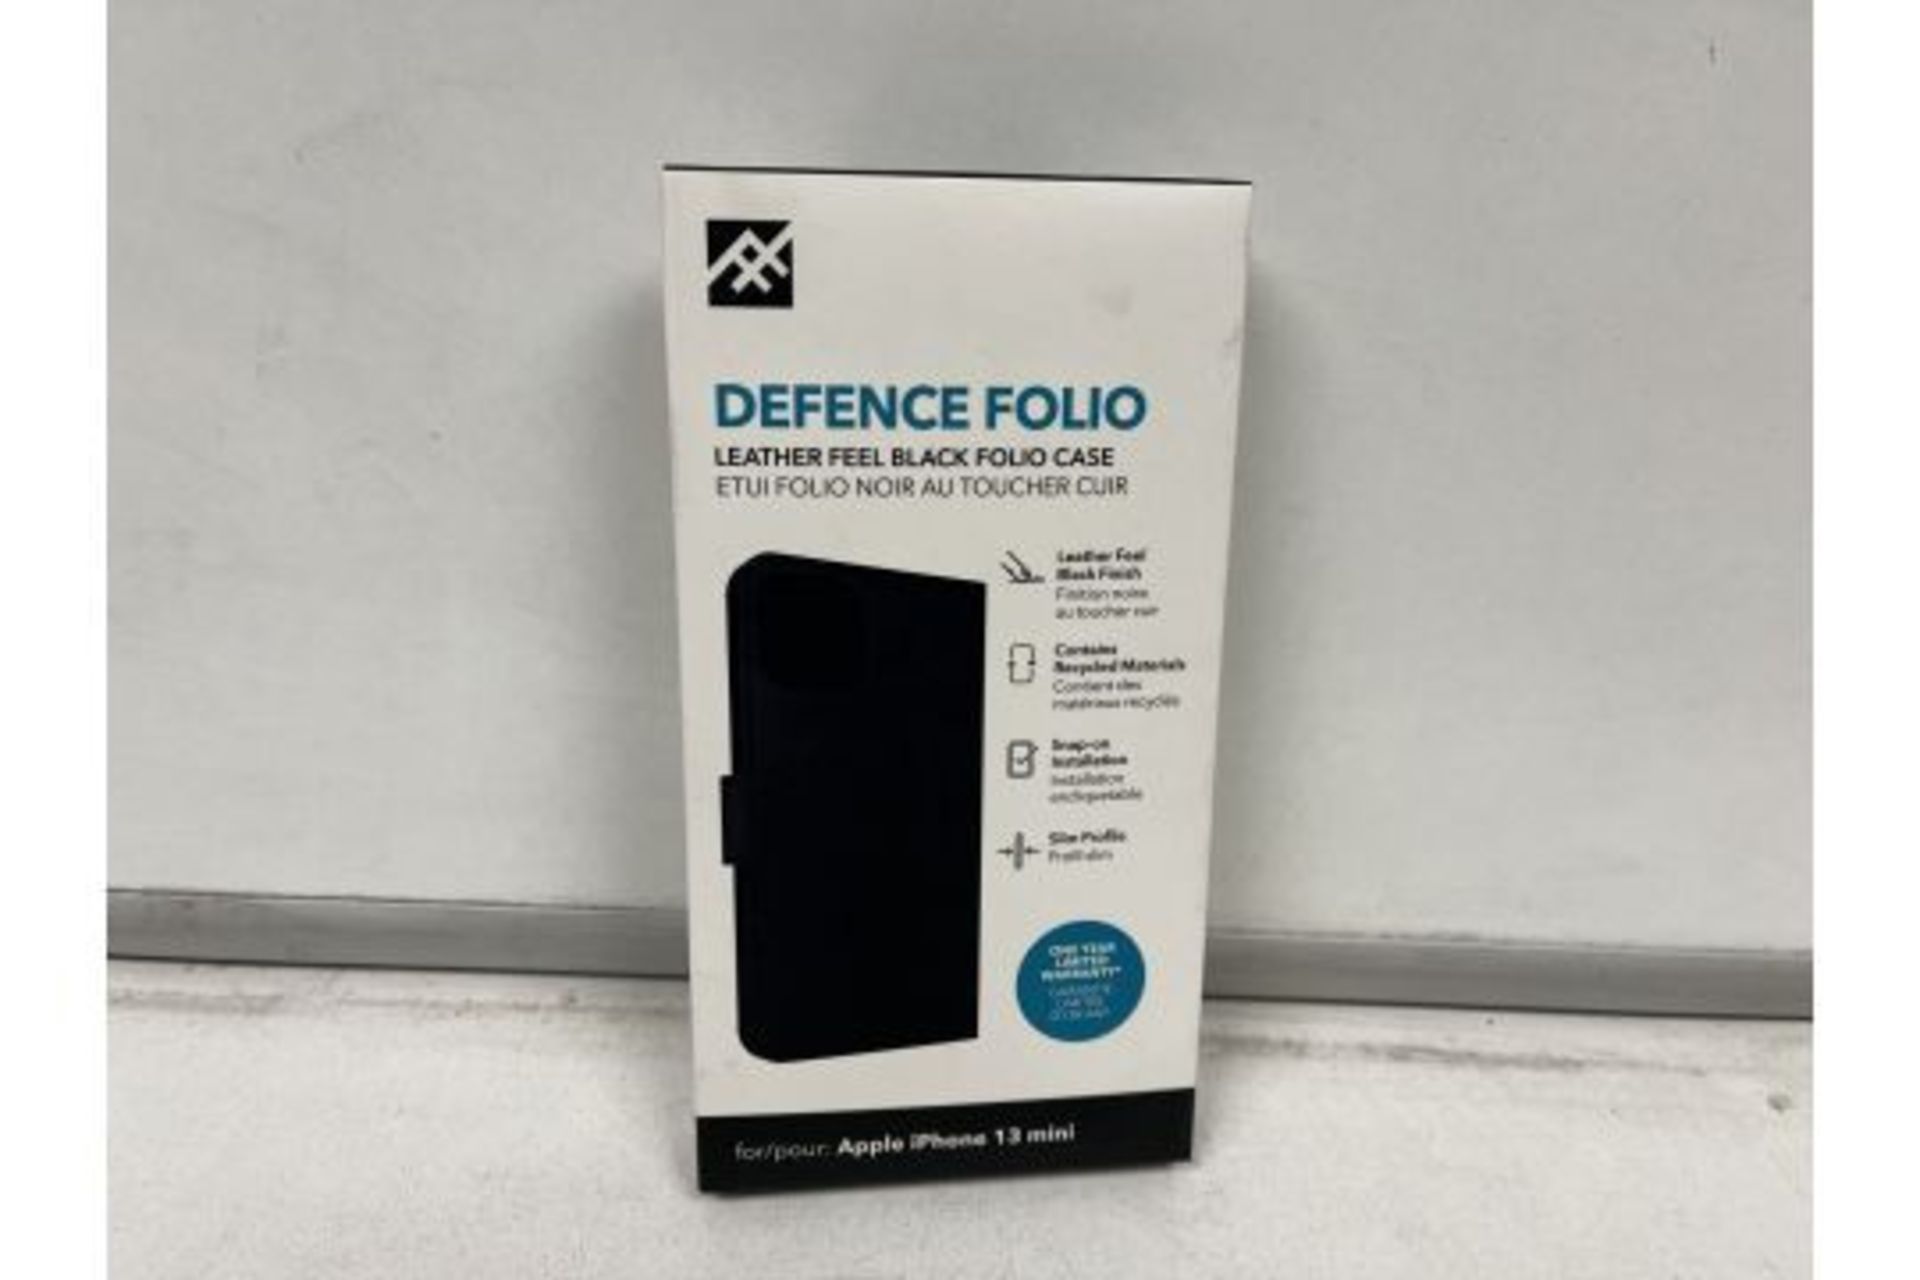 60 X NEW BOXED DEFENCE FOLIO LEATHER FEEL BLACK FOLIO CASES FOR APPLE iPHONE 13 MINI. ROW16RACK